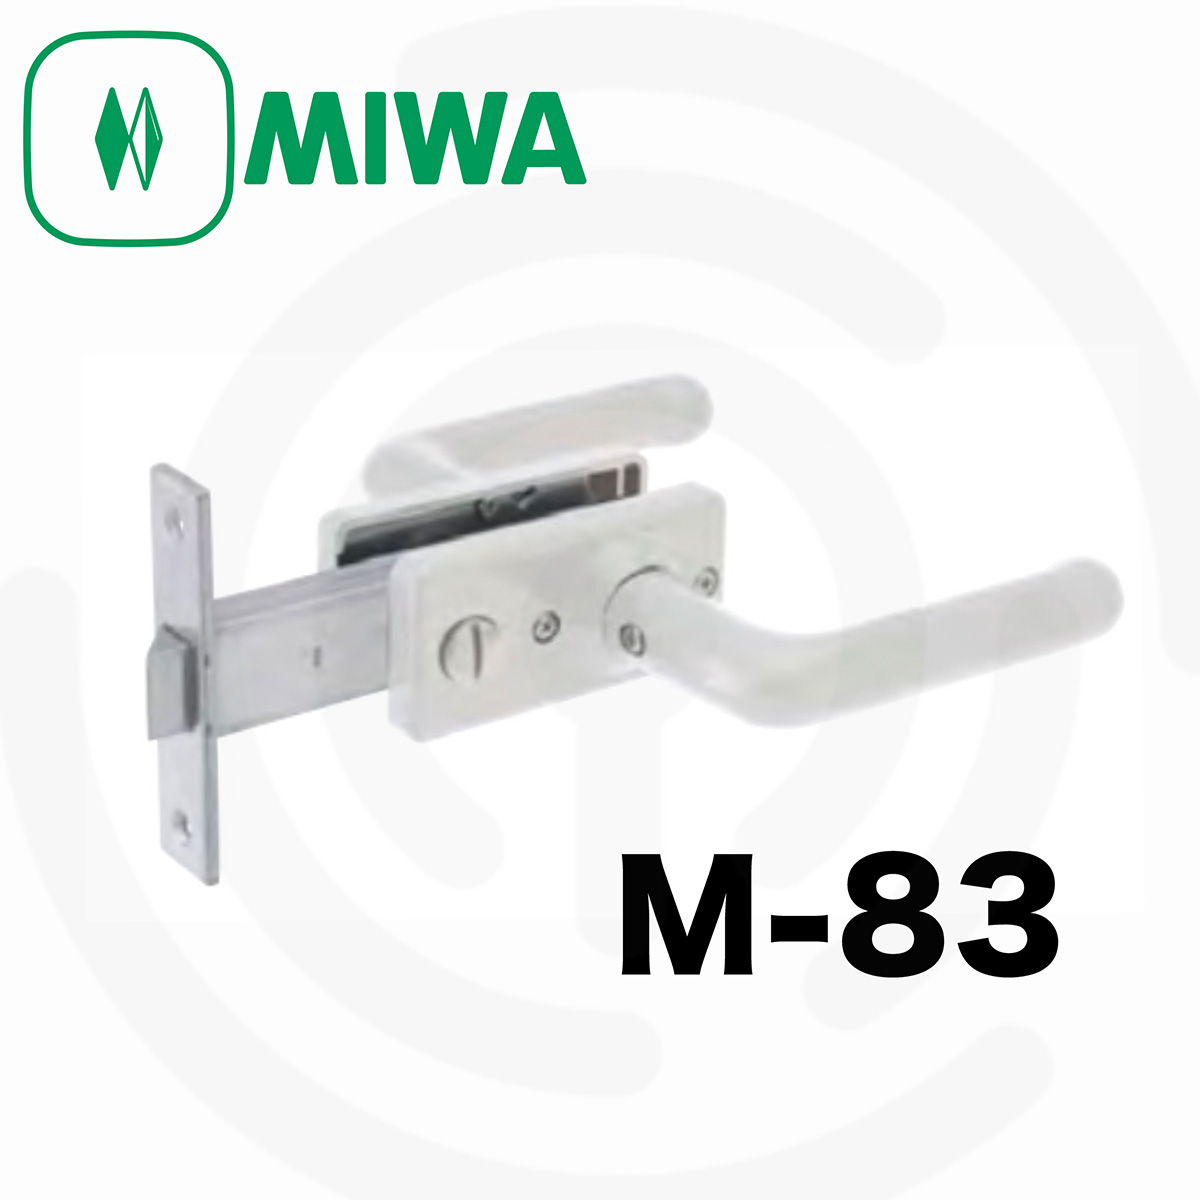 MIWA 【美和ロック】 特殊錠 玄関錠 [MIWA-M-83] Kシリーズ[M-83]｜鍵 